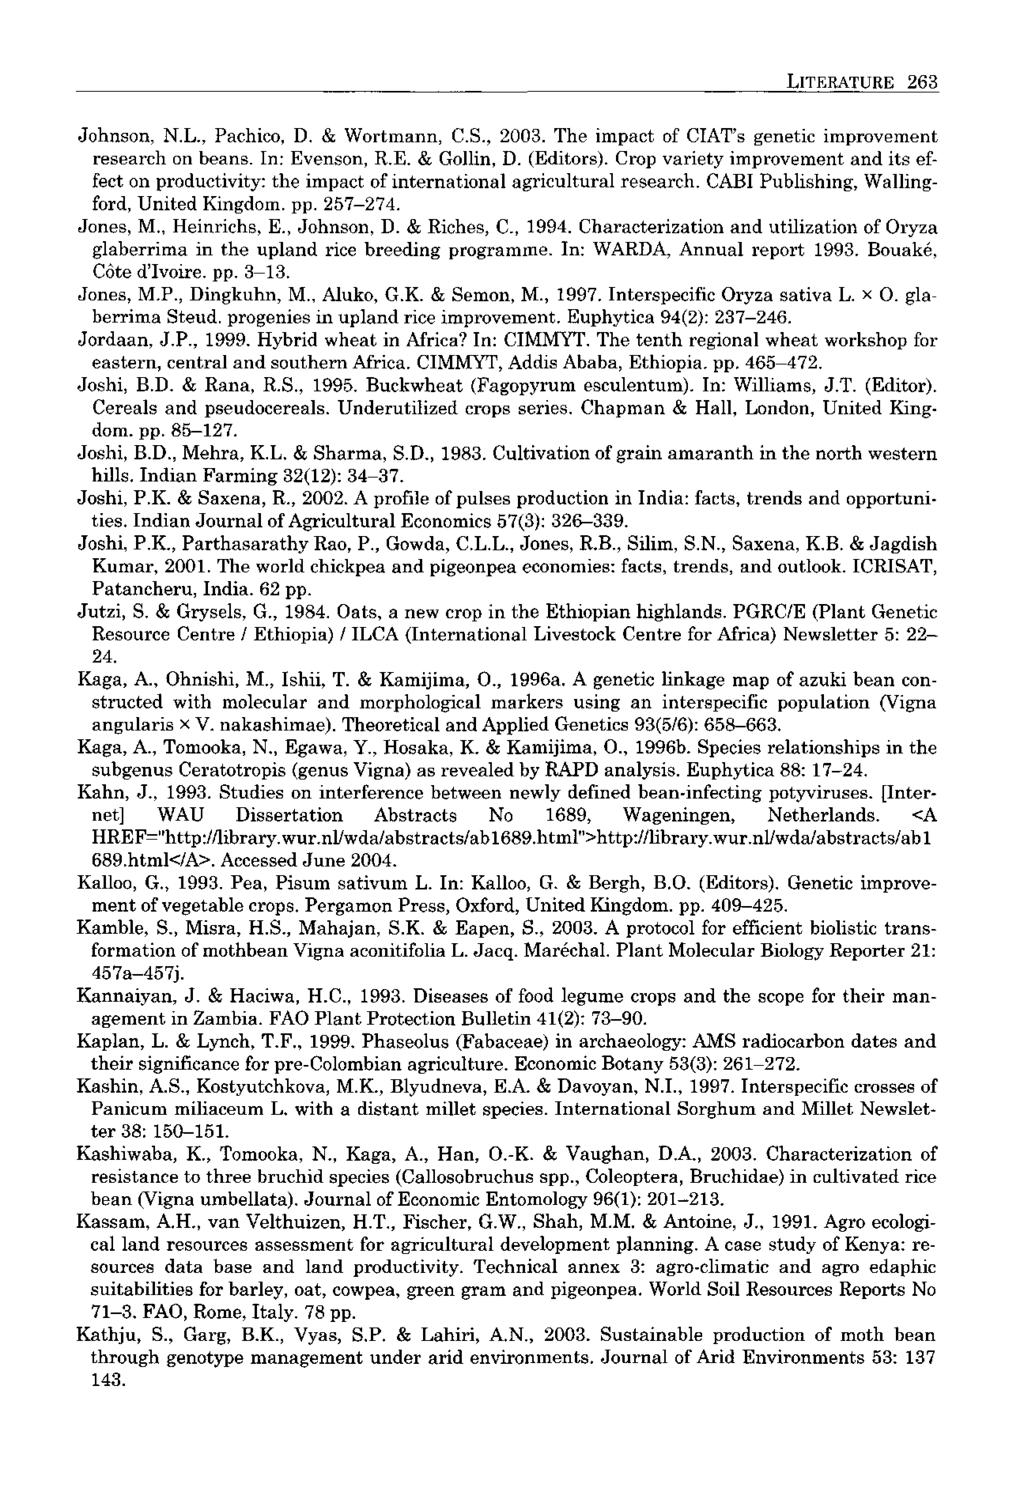 LITERATURE 263 Johnson, N.L., Pachico, D. & Wortmann, CS., 2003. The impact of CIAT's genetic improvement research on beans. In: Evenson, R.E. & Gollin, D. (Editors).